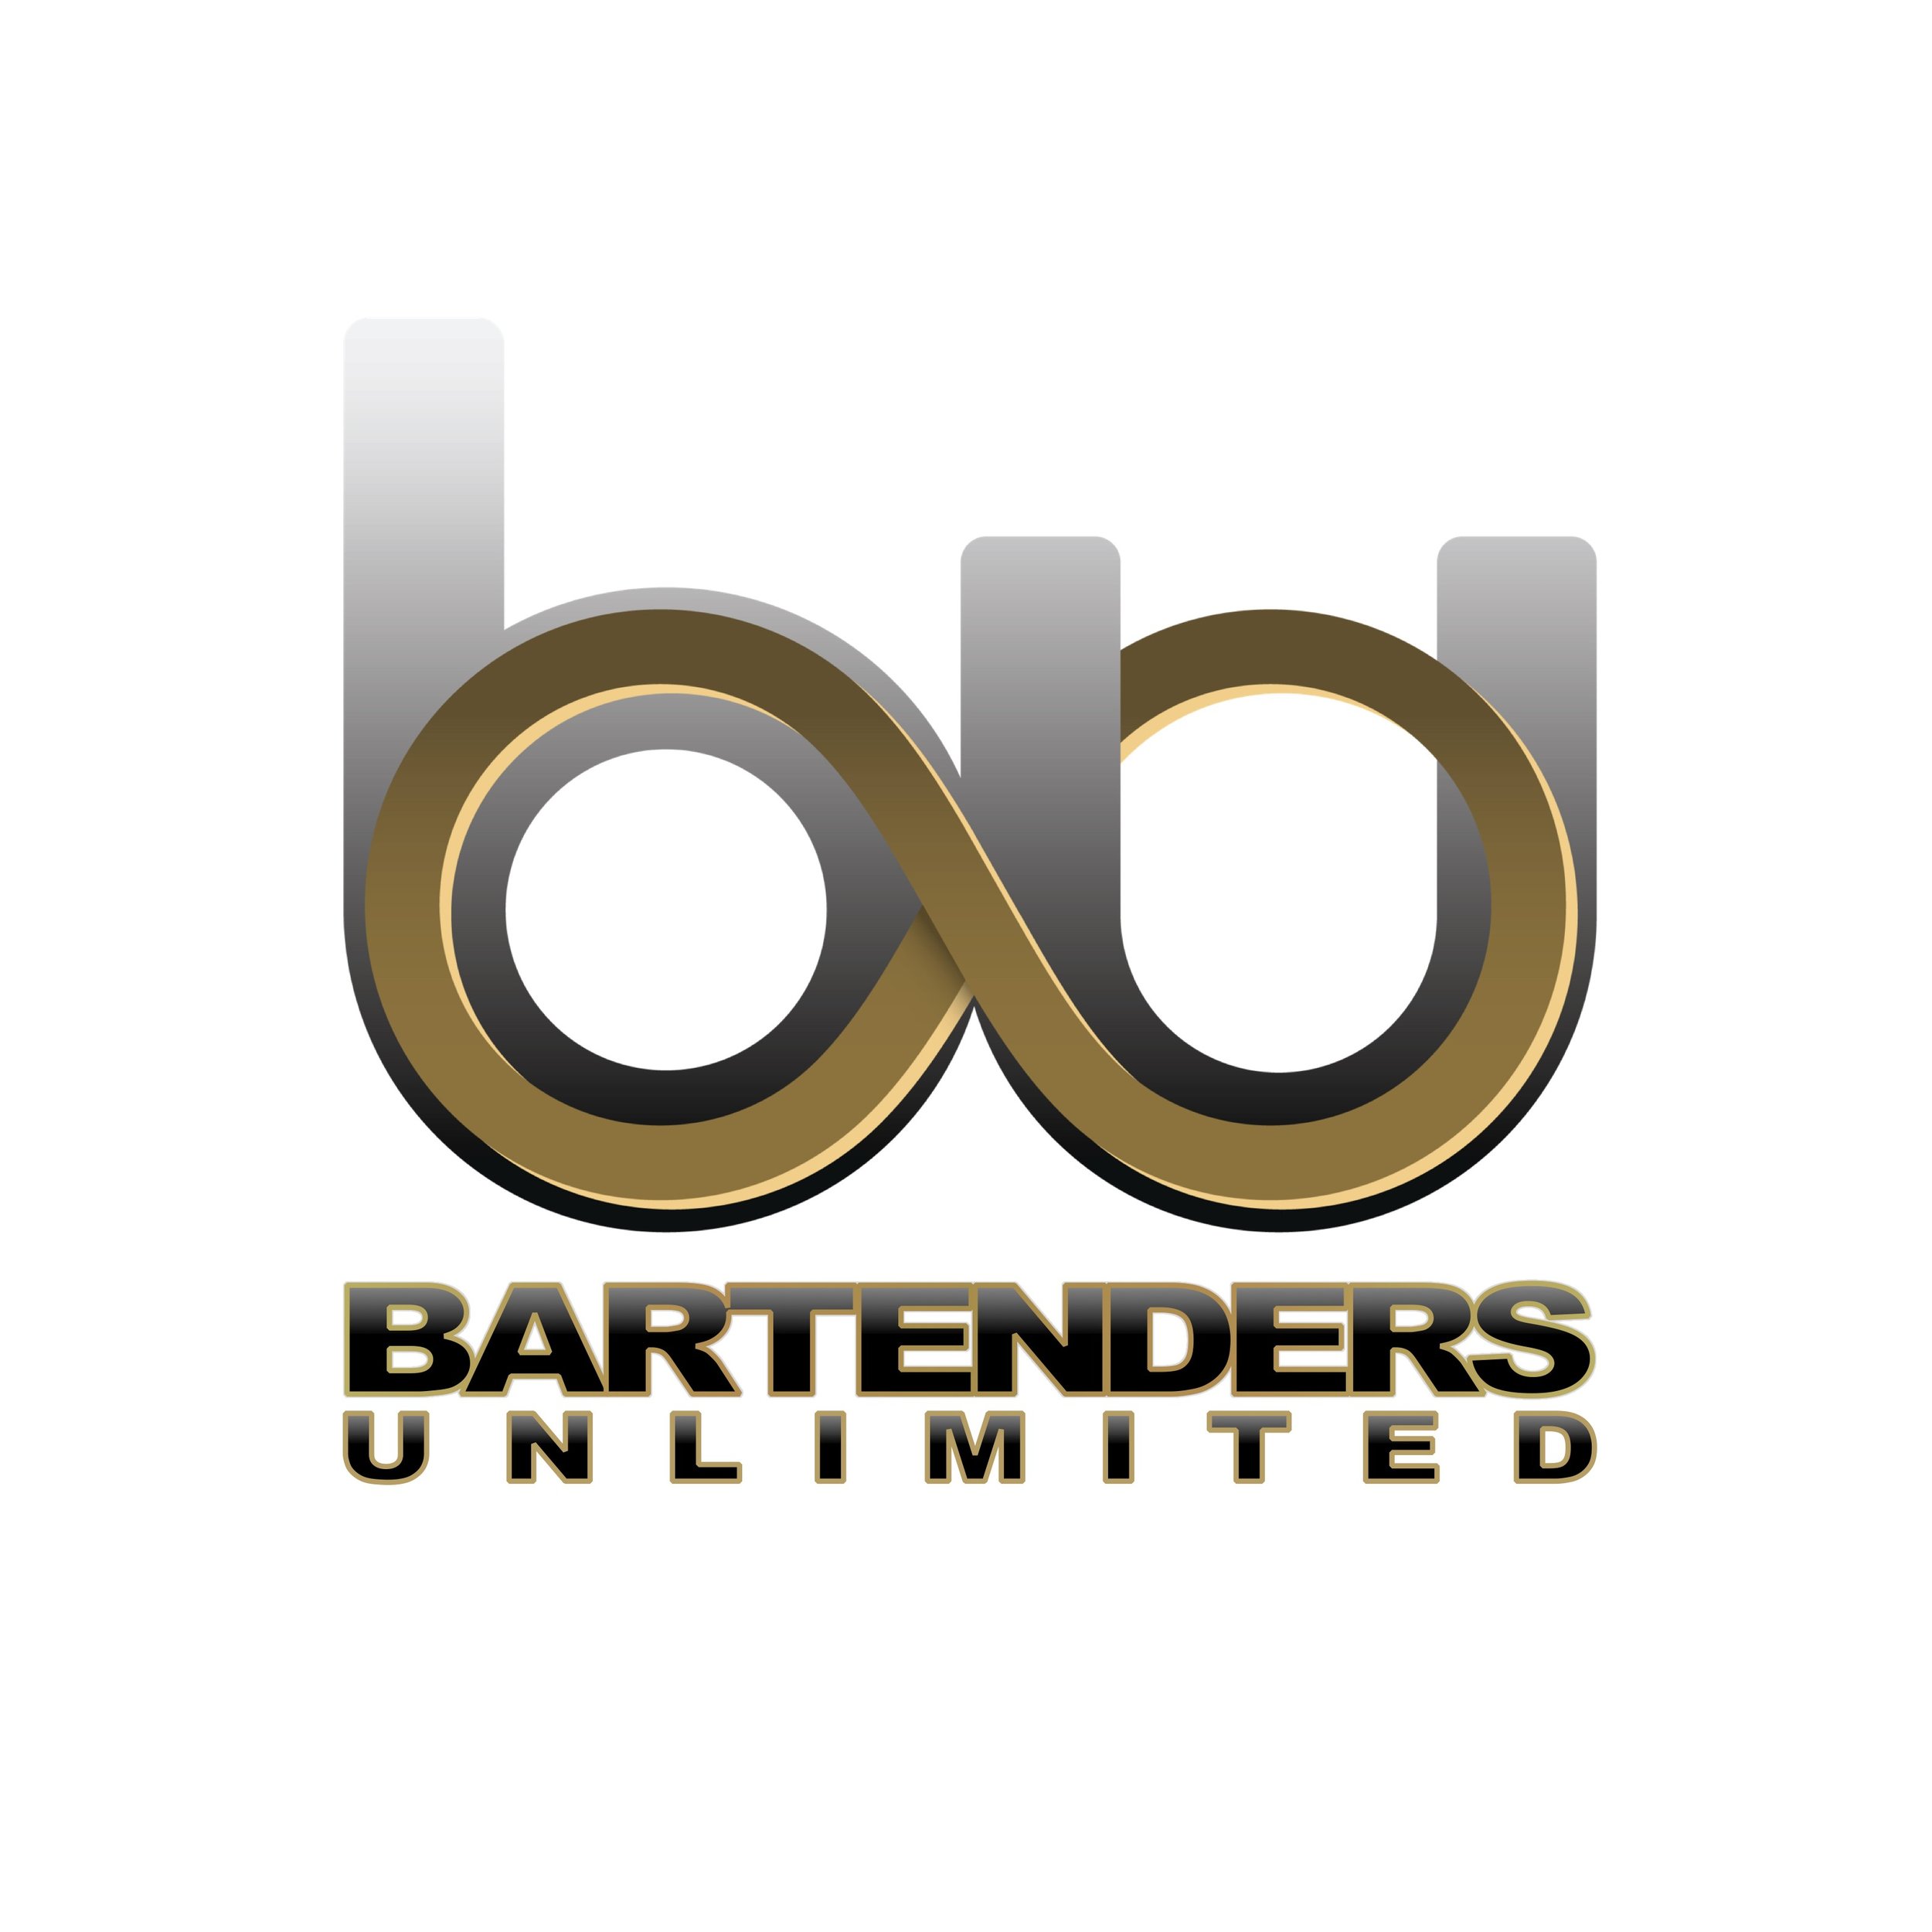 Bartenders Unlimited Logo Register.jpg